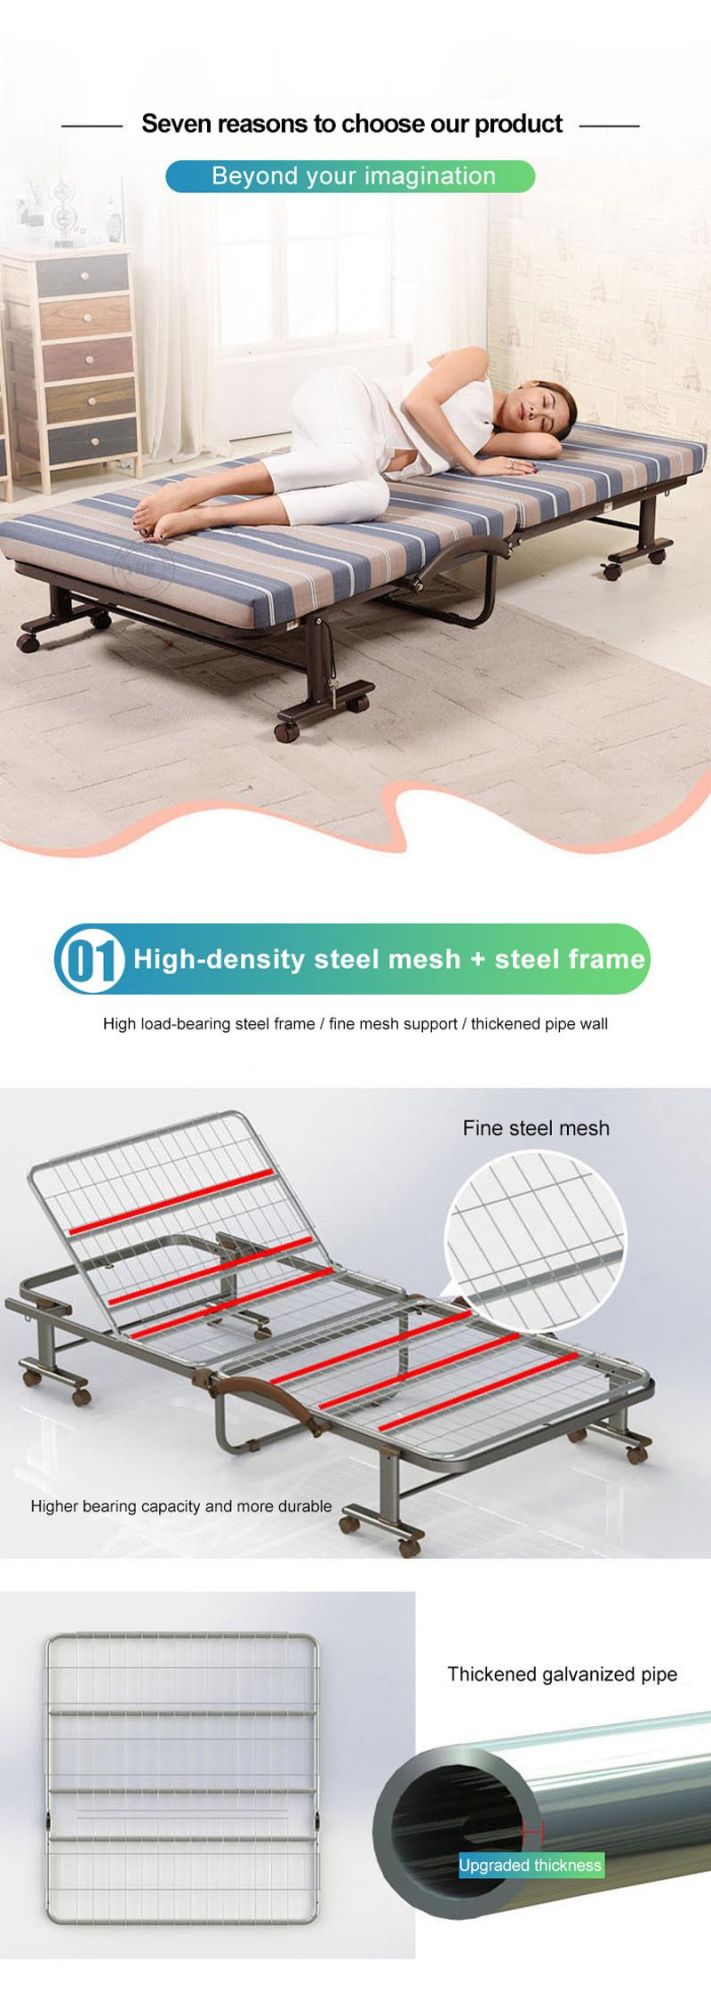 Wholesale Folding Bed Portable Bedroom Furniture Metal Frame on Wheels for Meeting Room